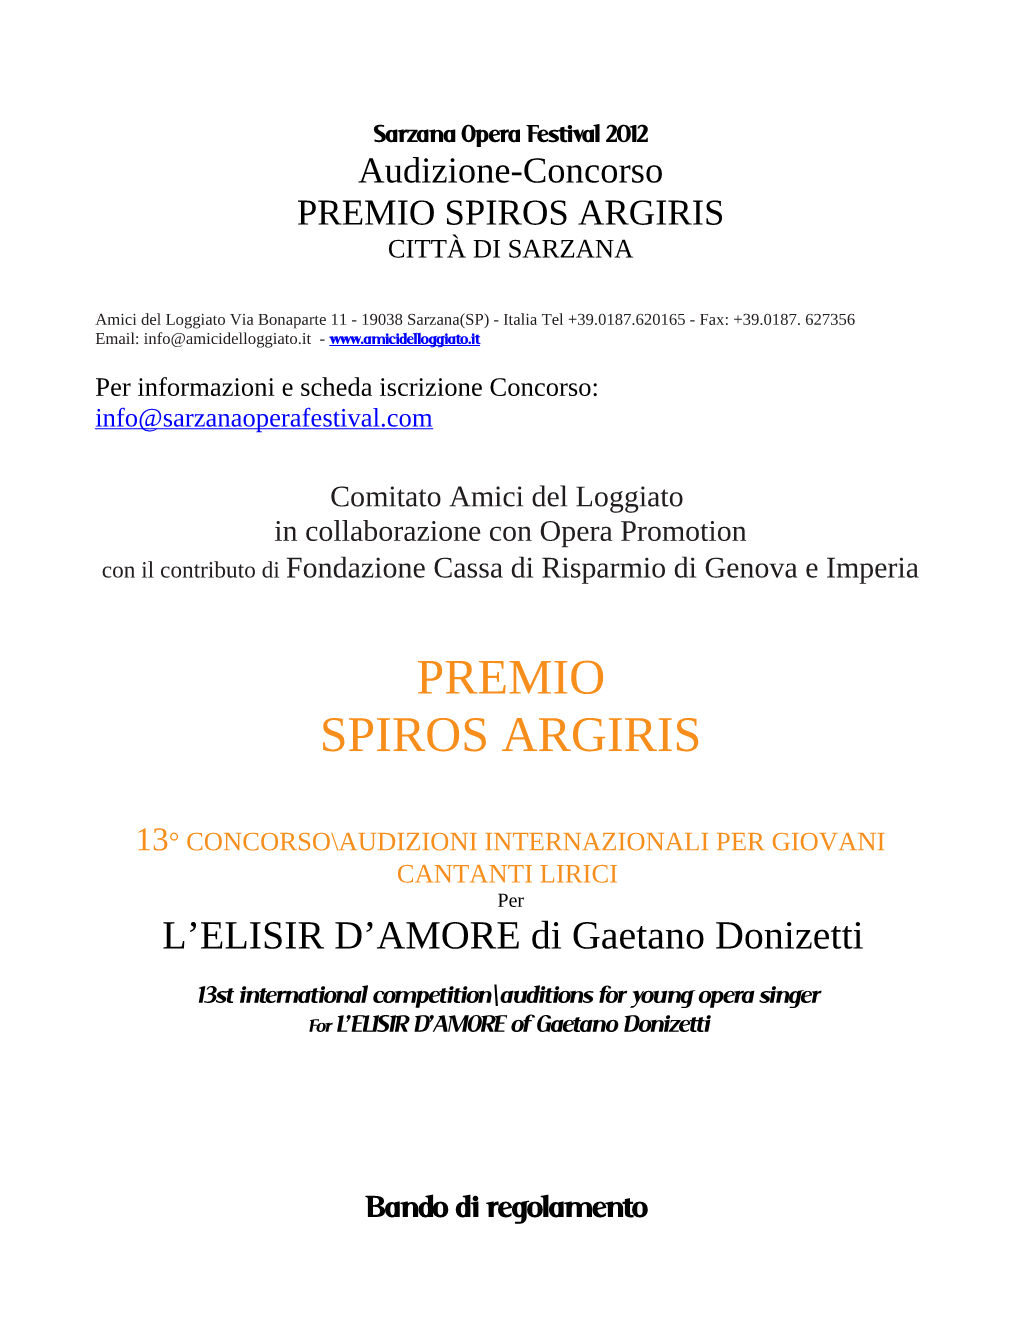 Premio Spiros Argiris Città Di Sarzana